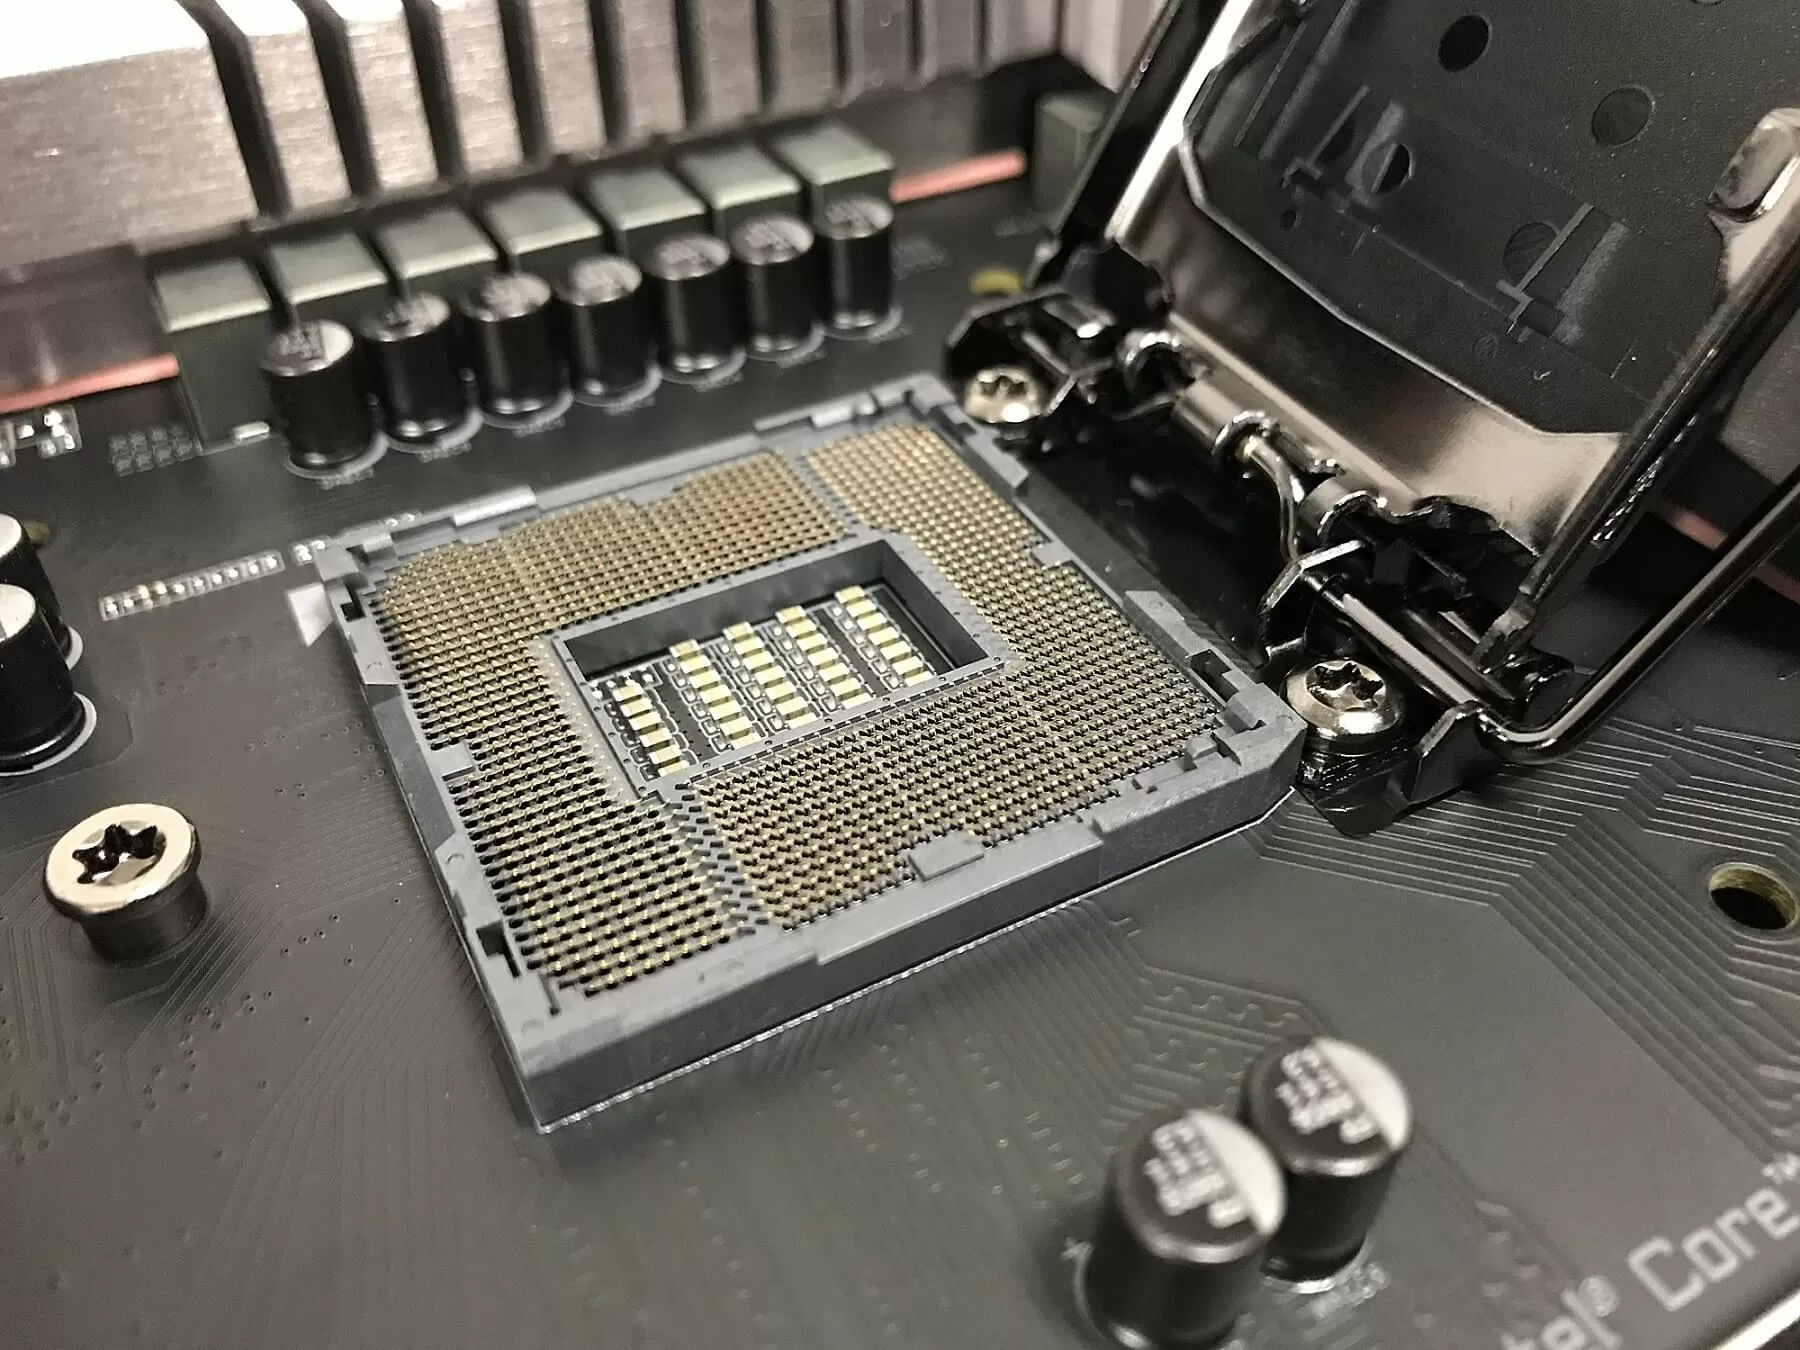 Intel's 12th-gen Alder Lake CPUs rumored to use LGA 1700 socket, replacing LGA 1200 after just two generations